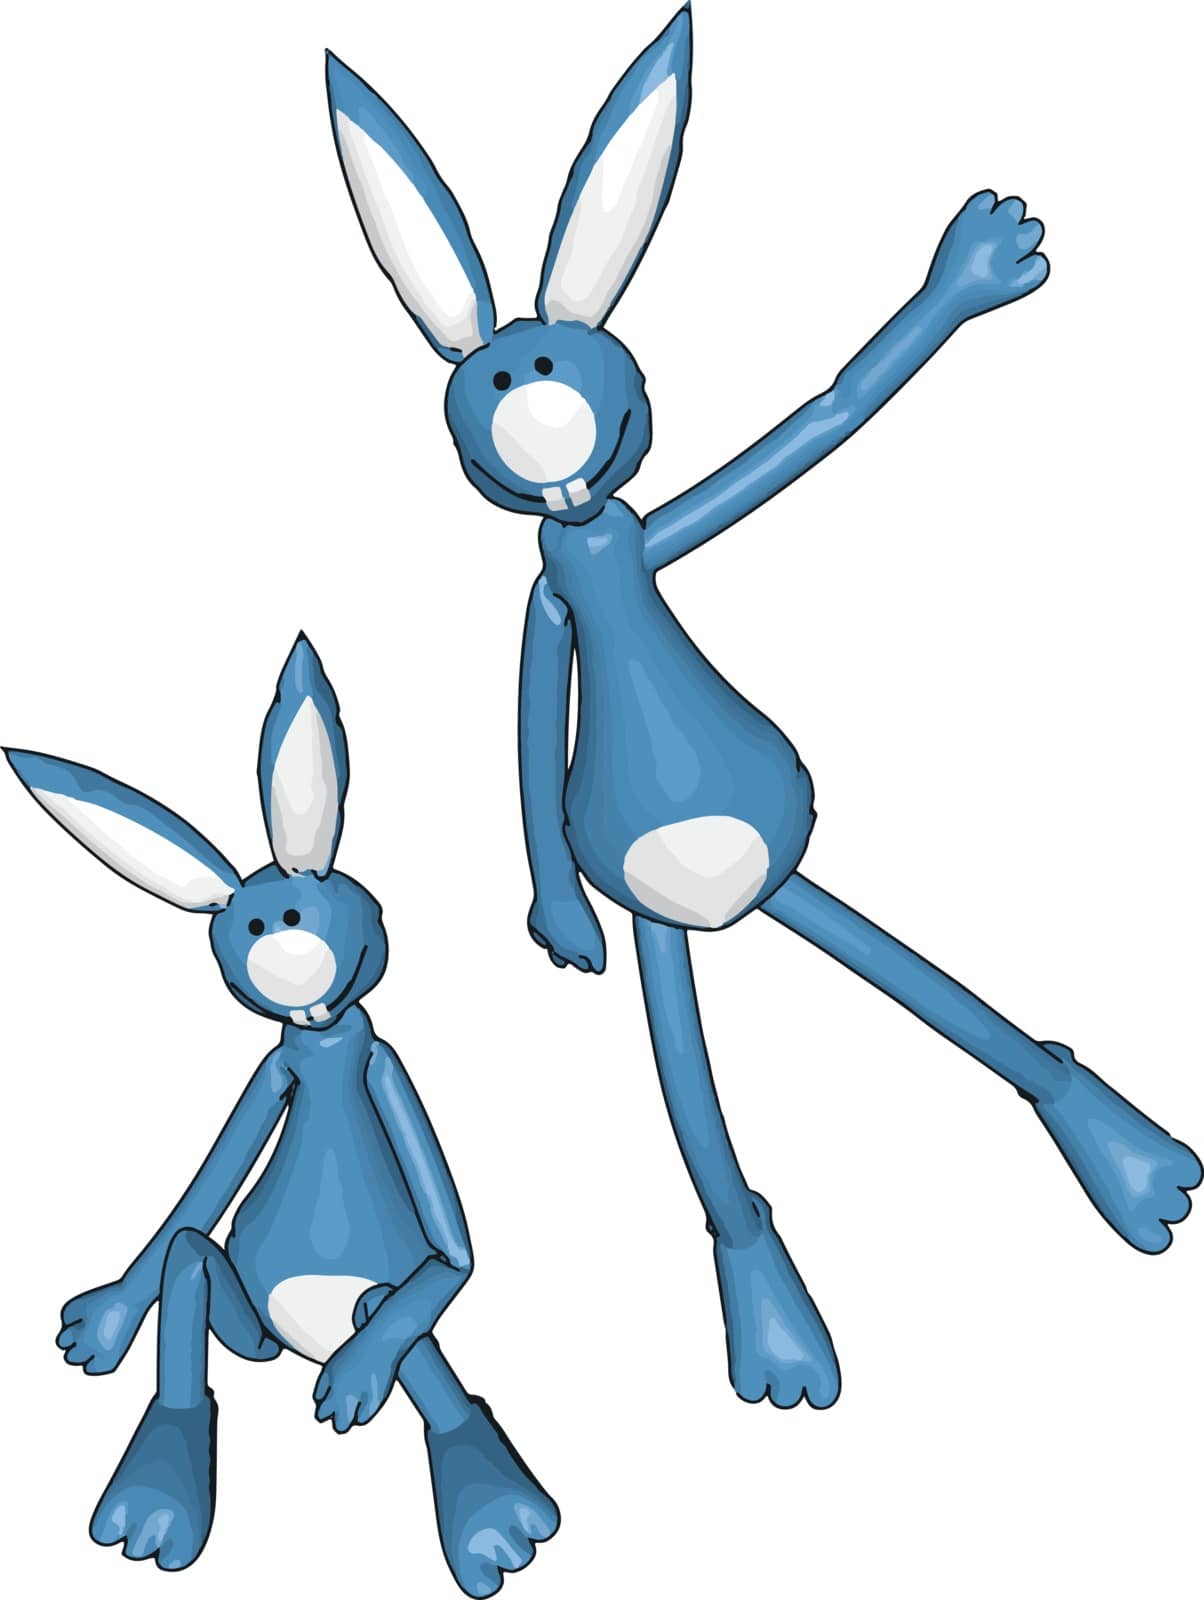 Bunny toys, illustration, vector on white background. by Morphart